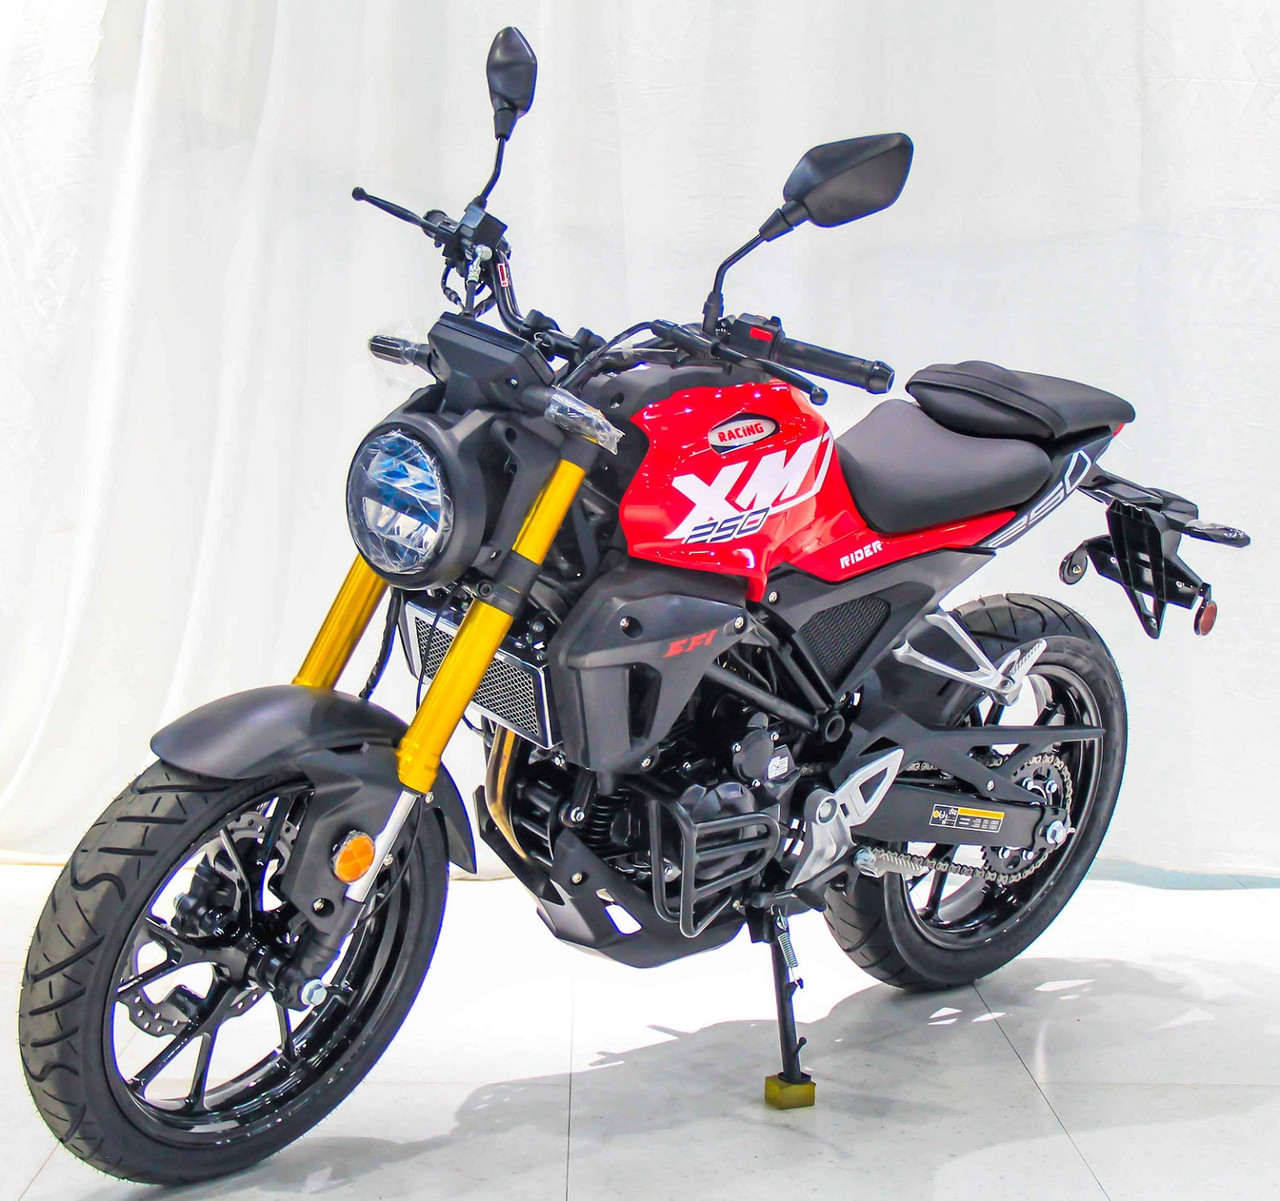 Vitacci XMT 250 EFI Sport Bike, 6 Speeds, 4-stroke, Single Cylinder, Oil-cooling With Digital Speedometer  - Red